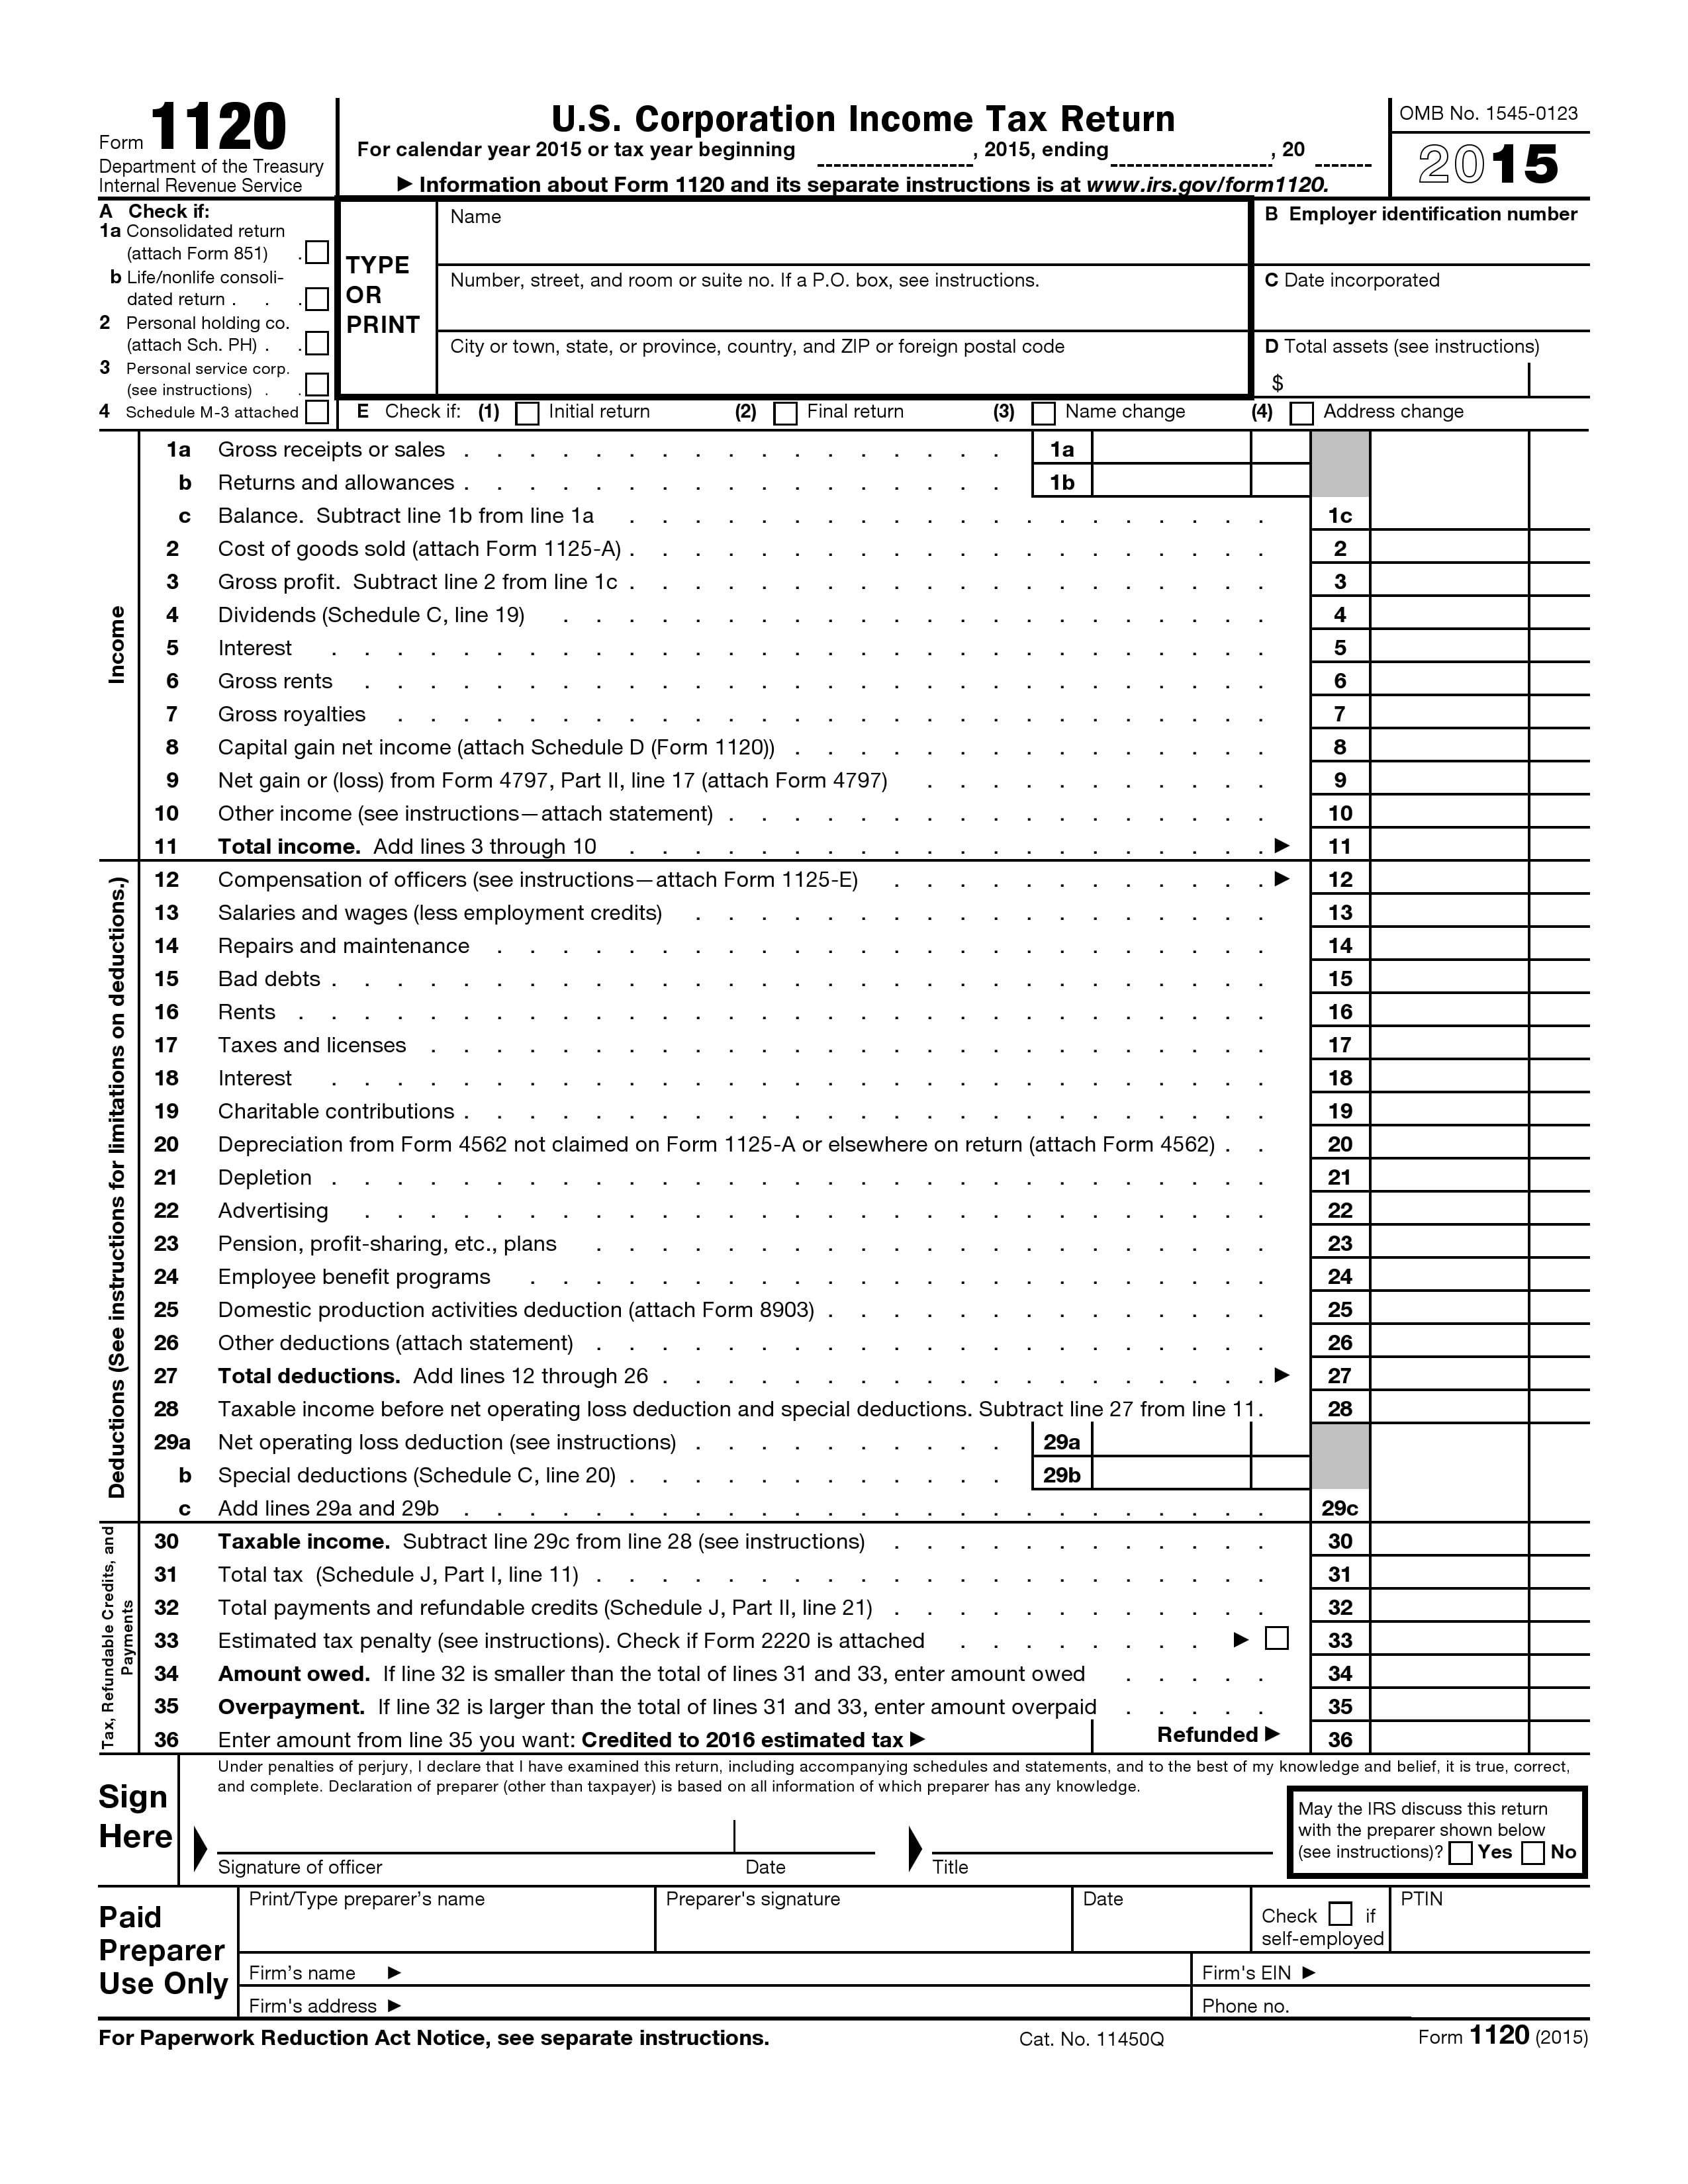 corporation tax form